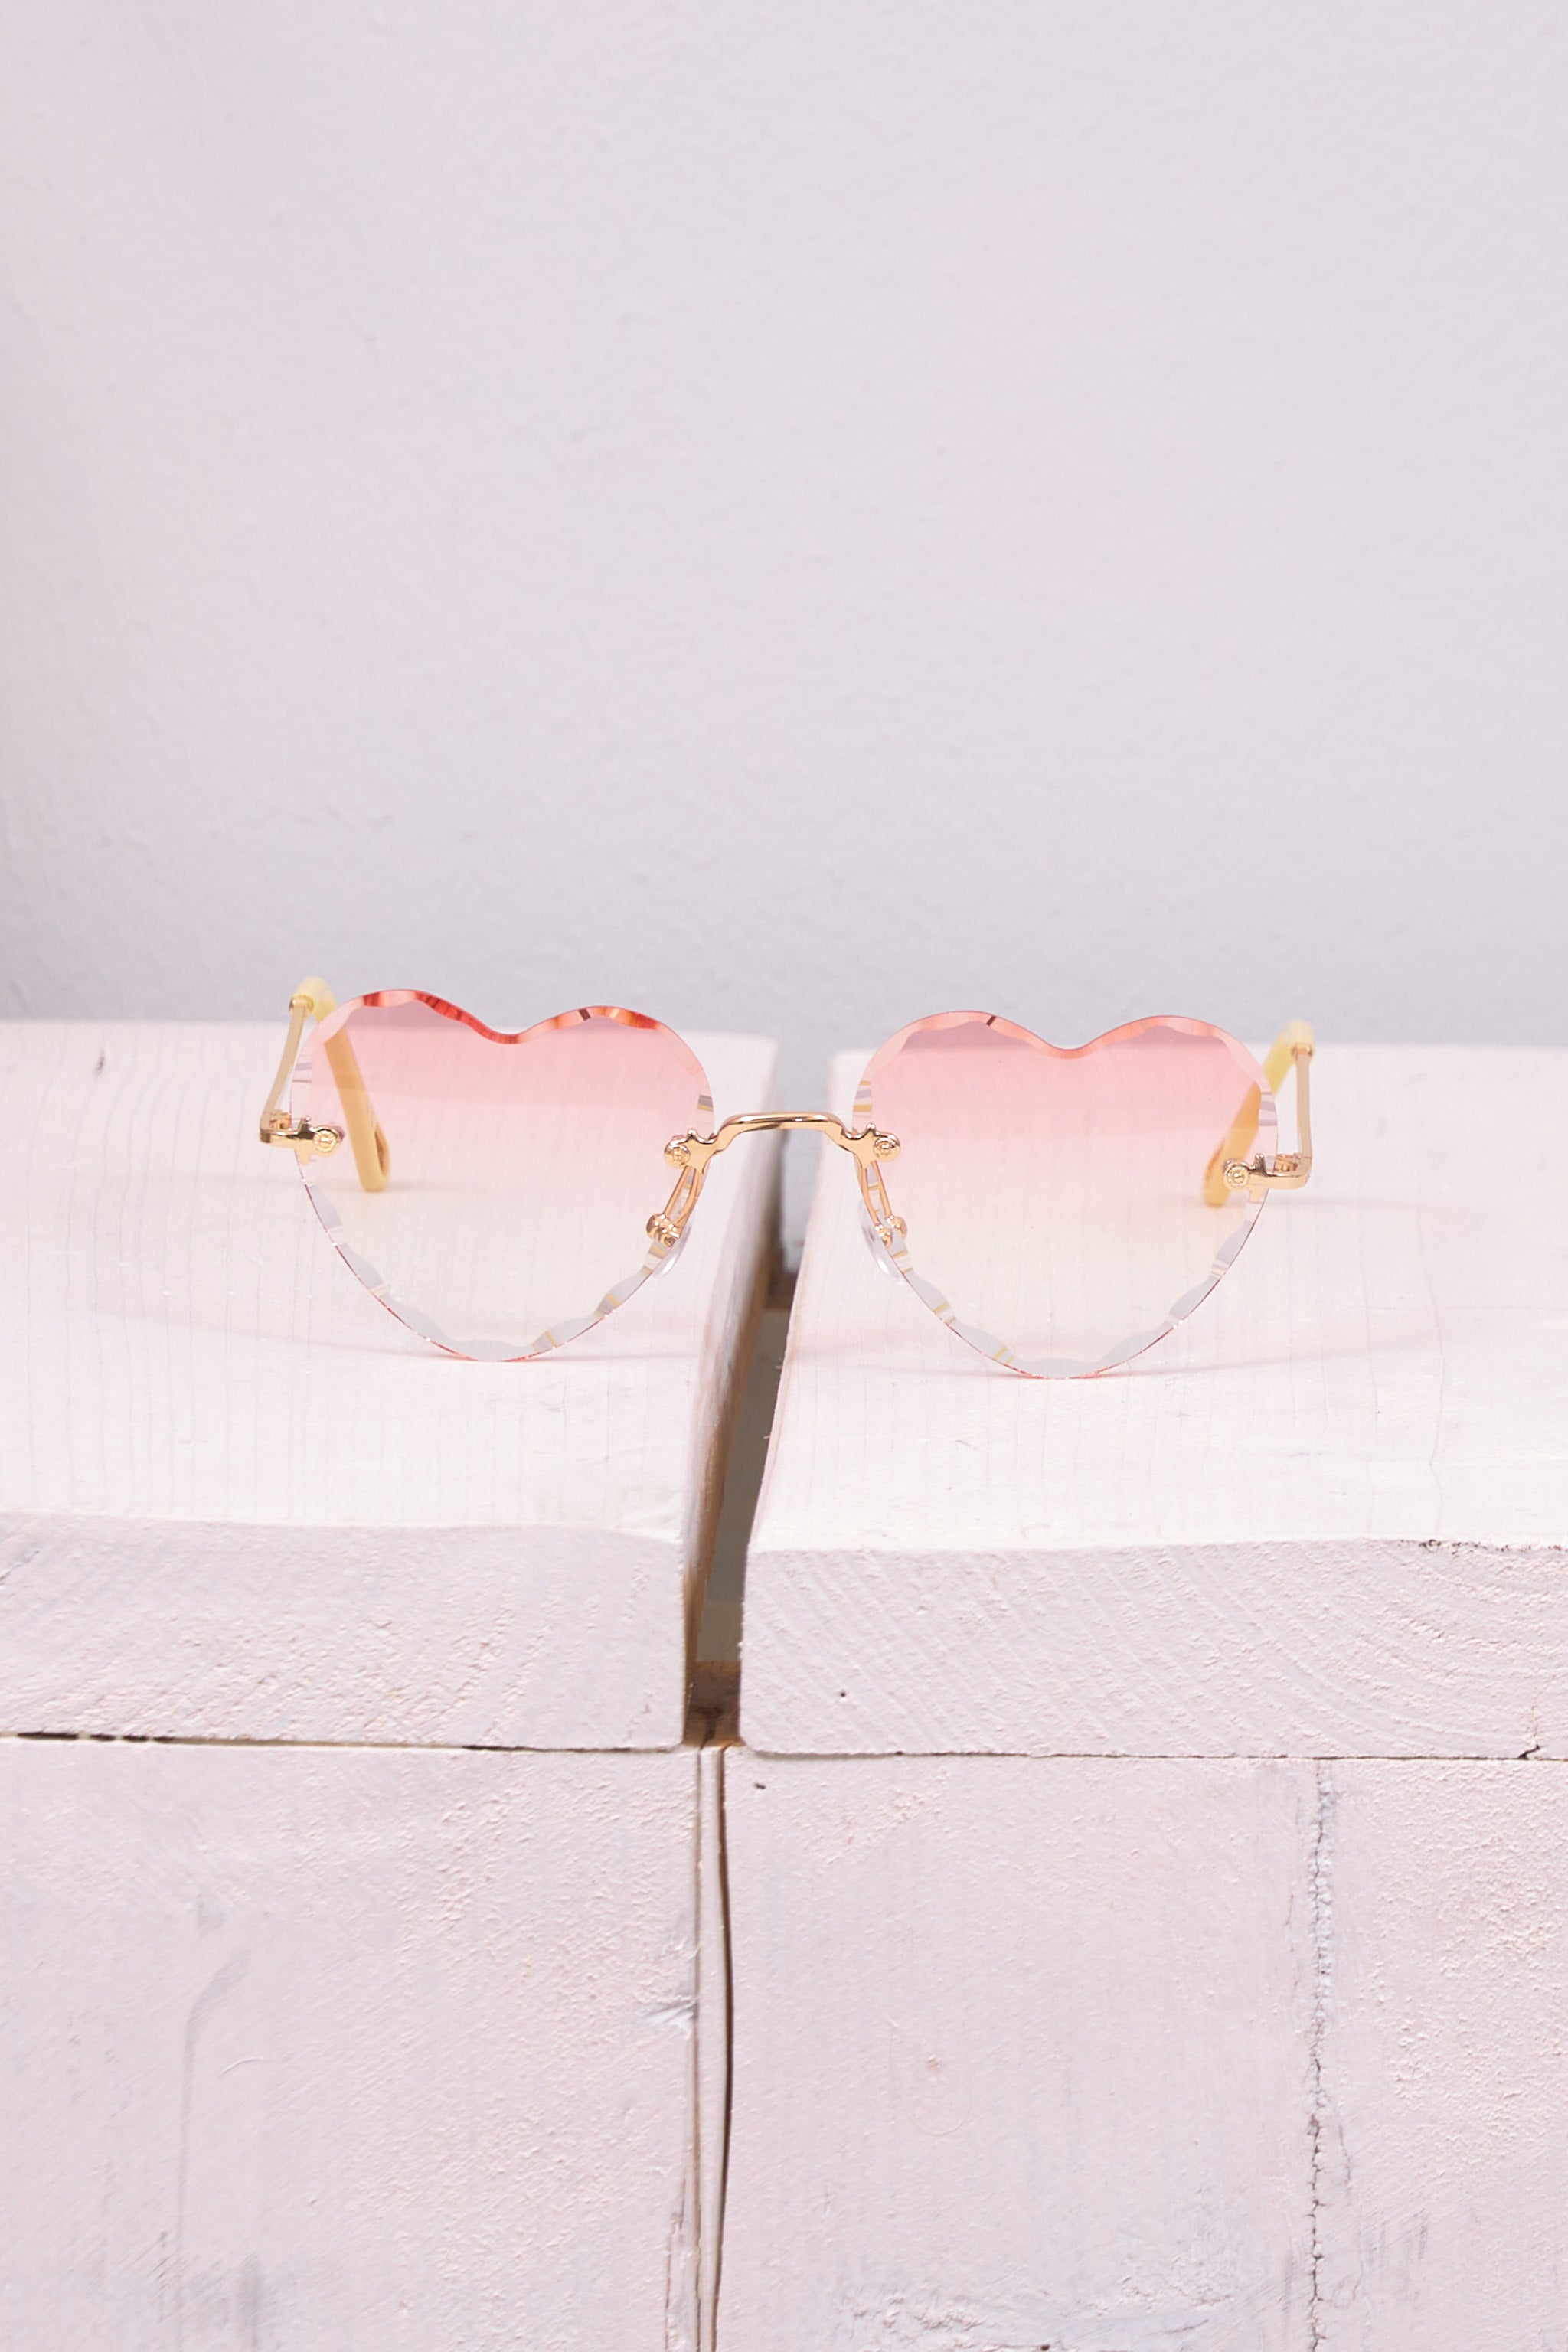 Heart shaped sunglasses, pink